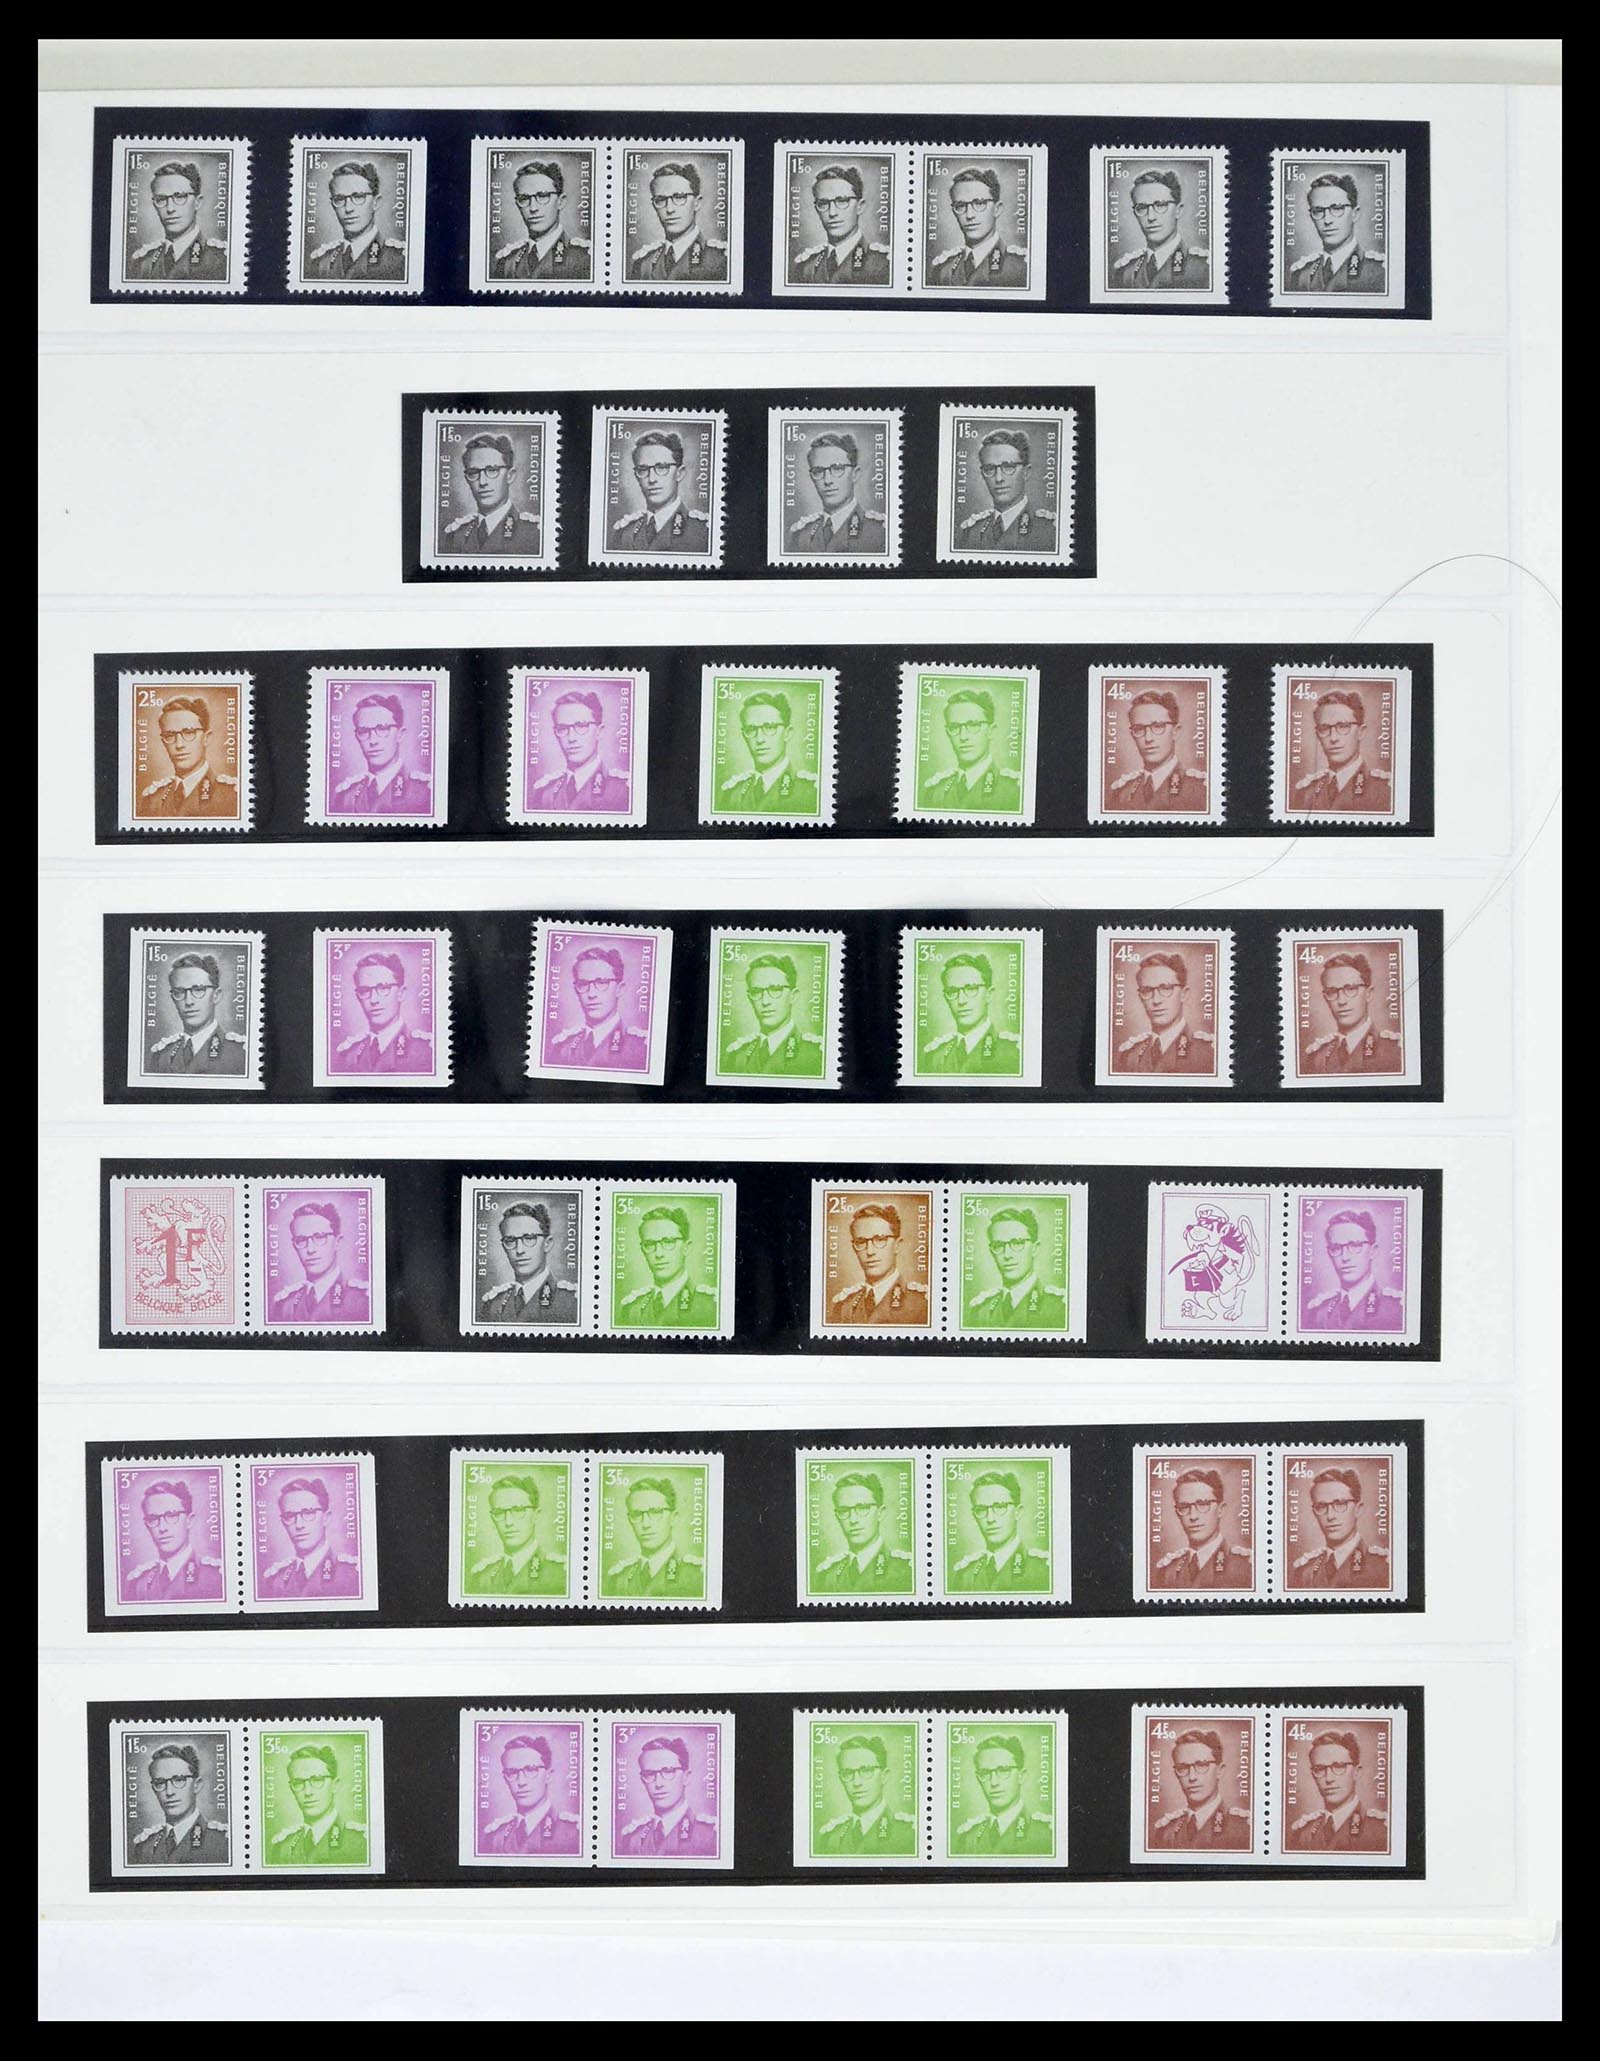 39229 0050 - Stamp collection 39229 Belgium Boudewijn with glasses 1952-1975.